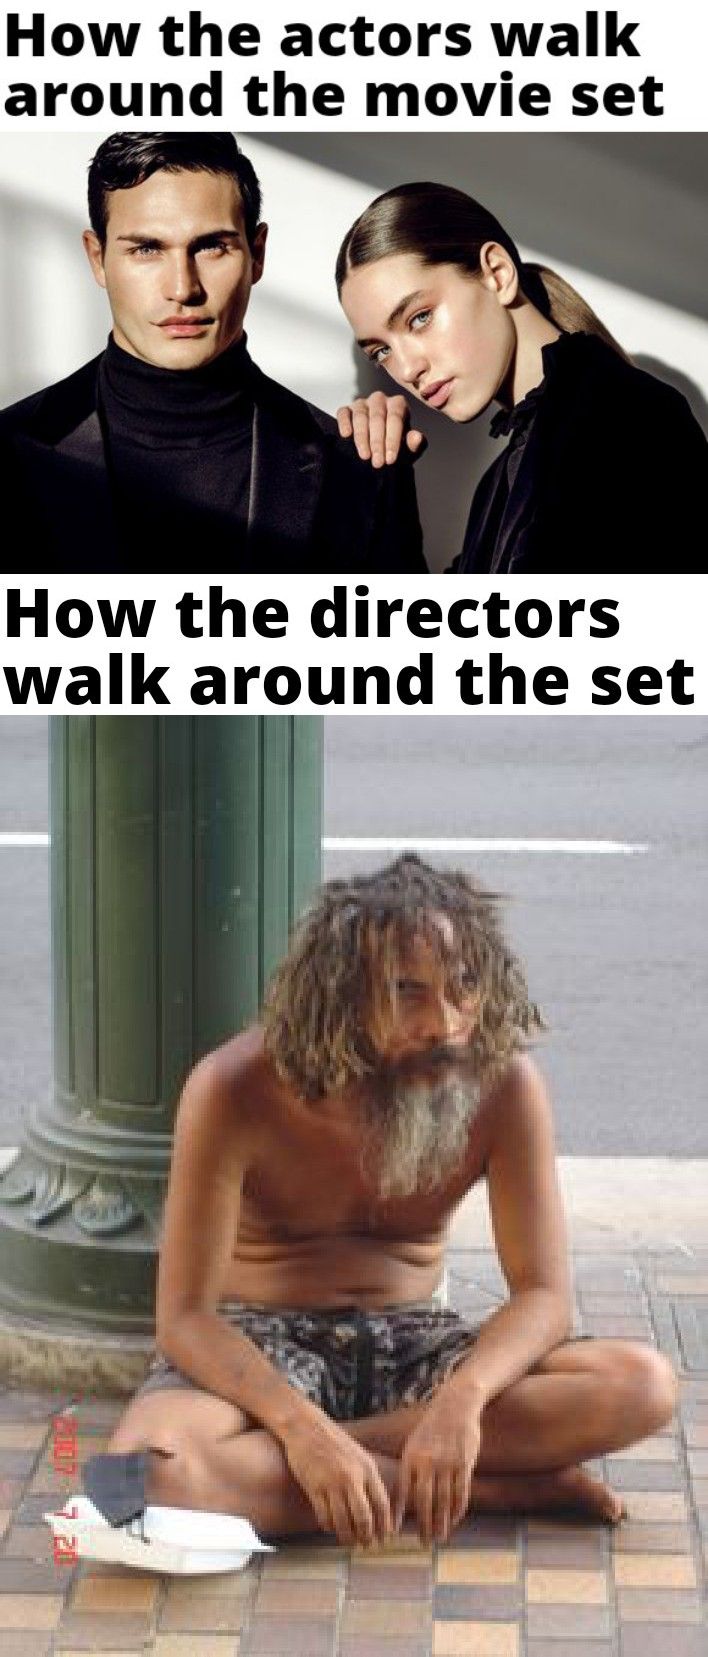 Never seen a good looking director